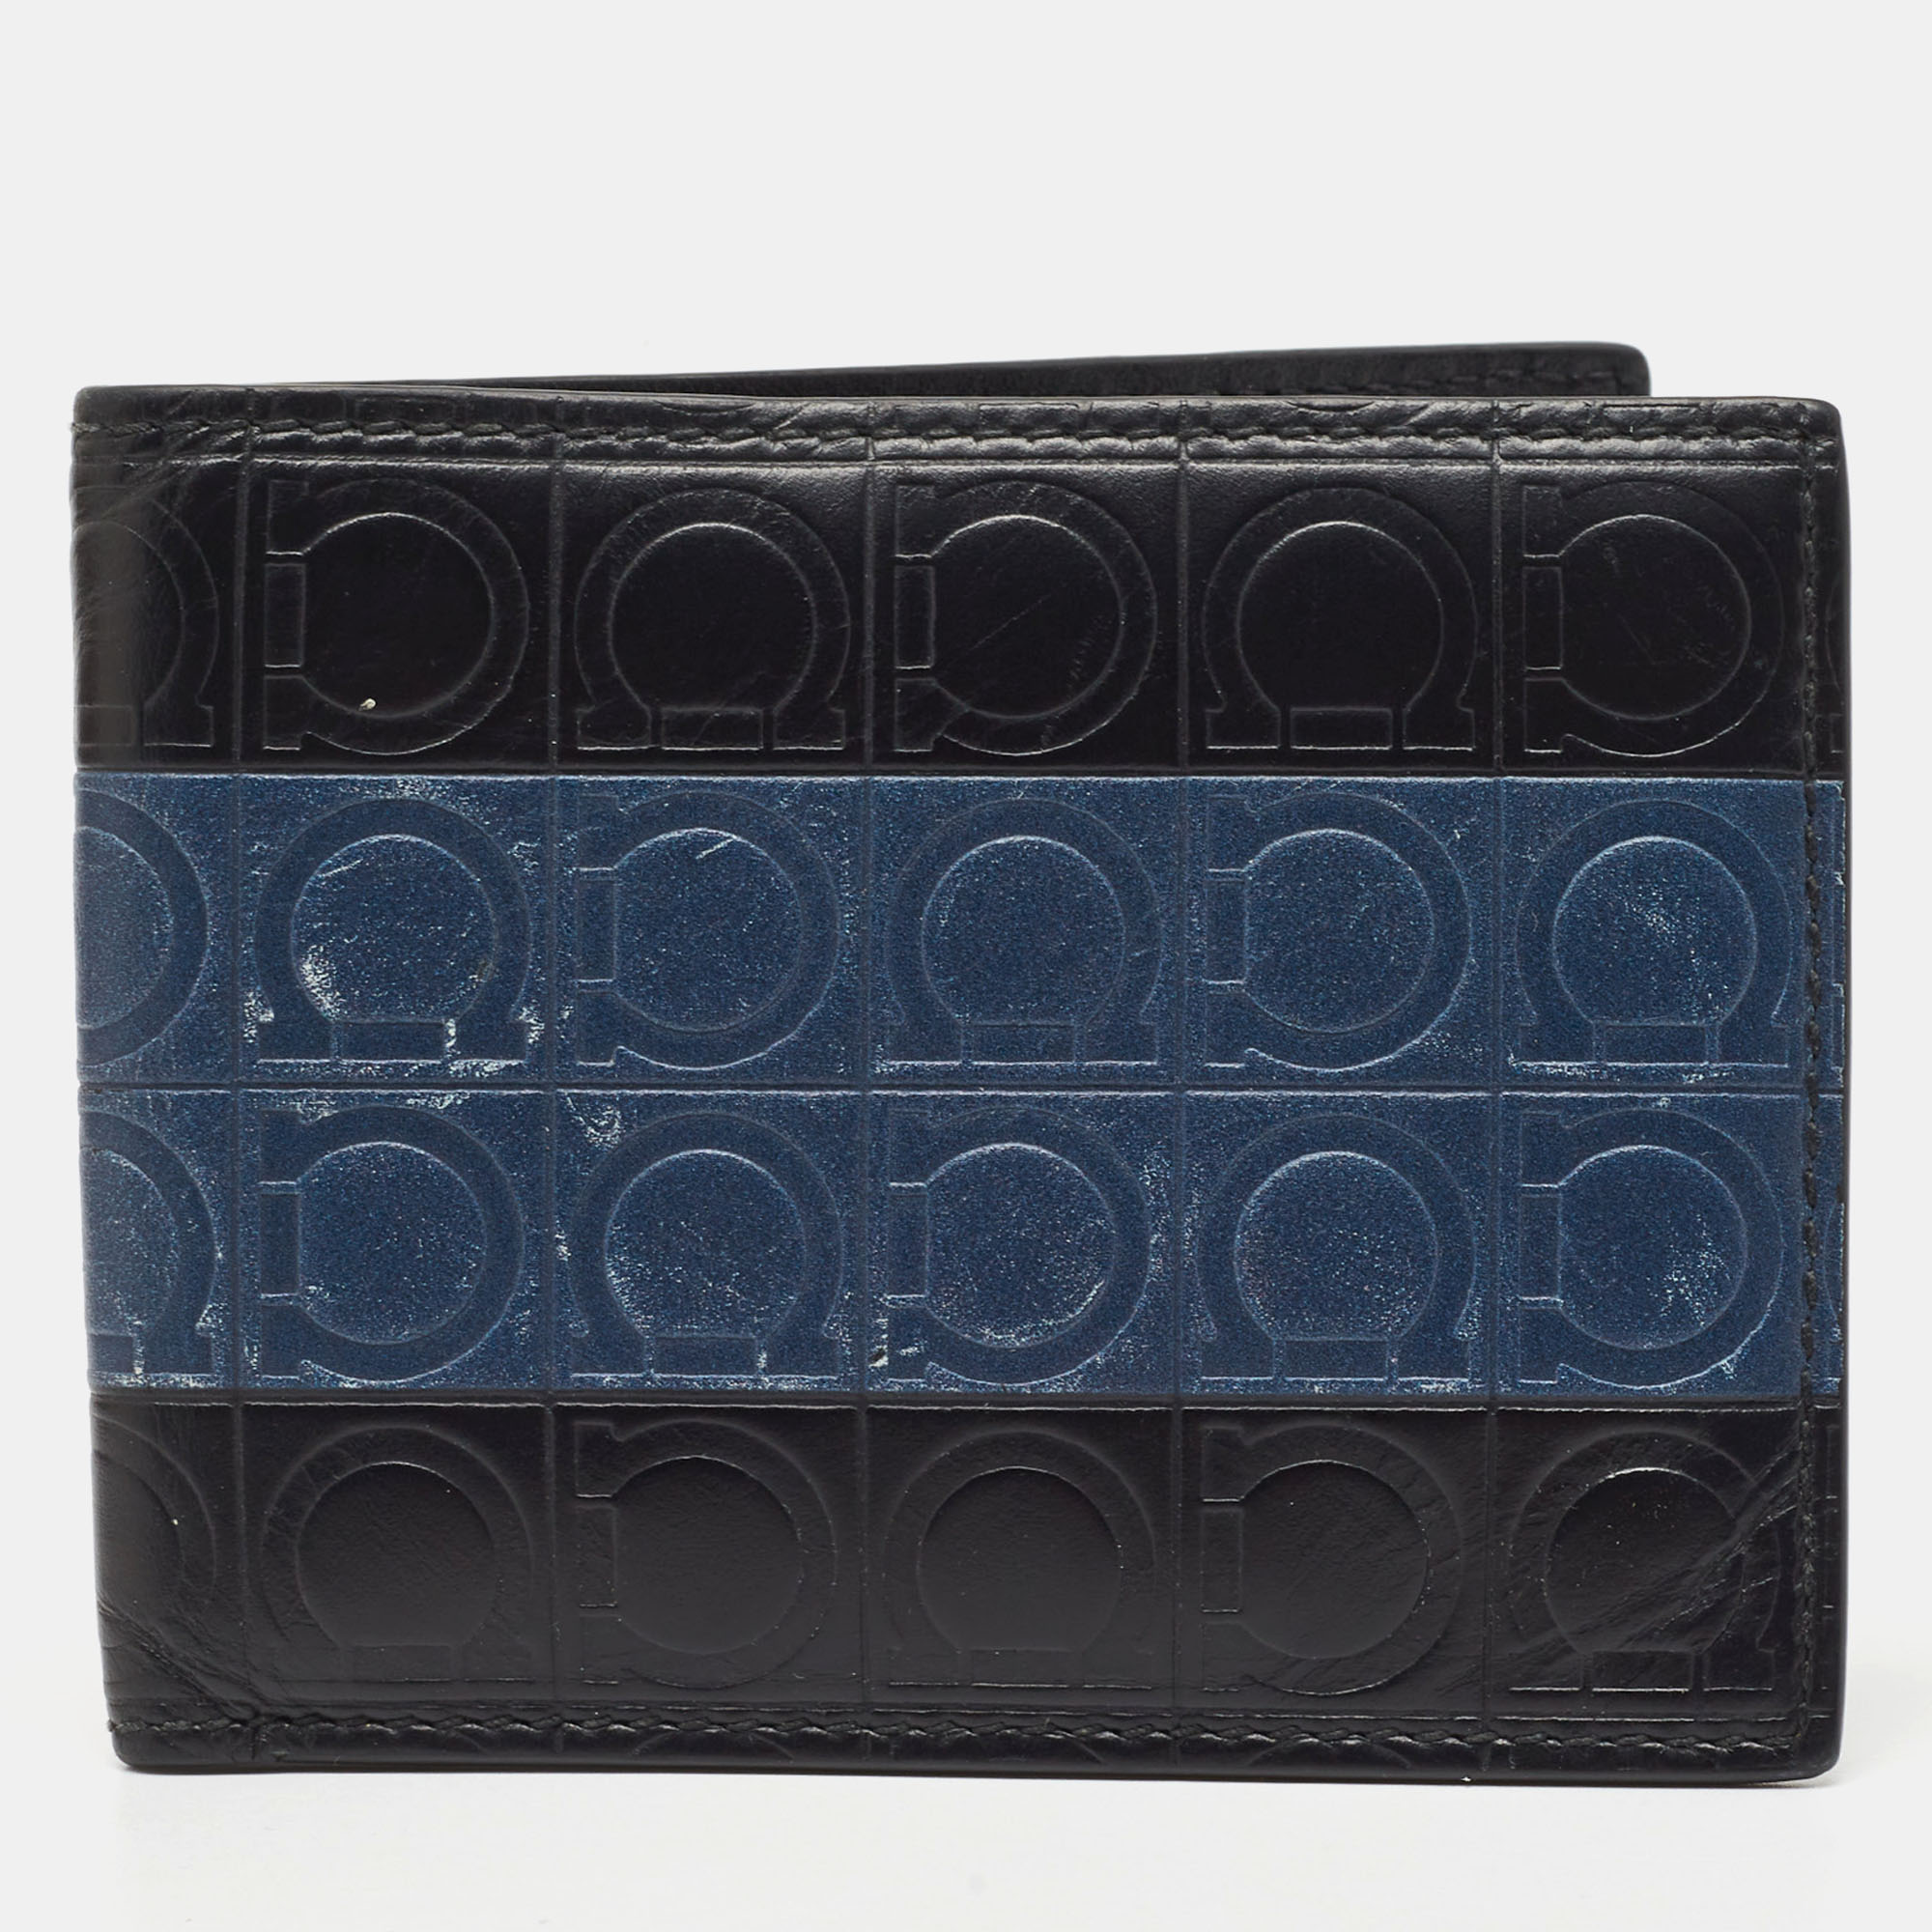 Salvatore ferragamo black/blue logo embossed leather bifold wallet